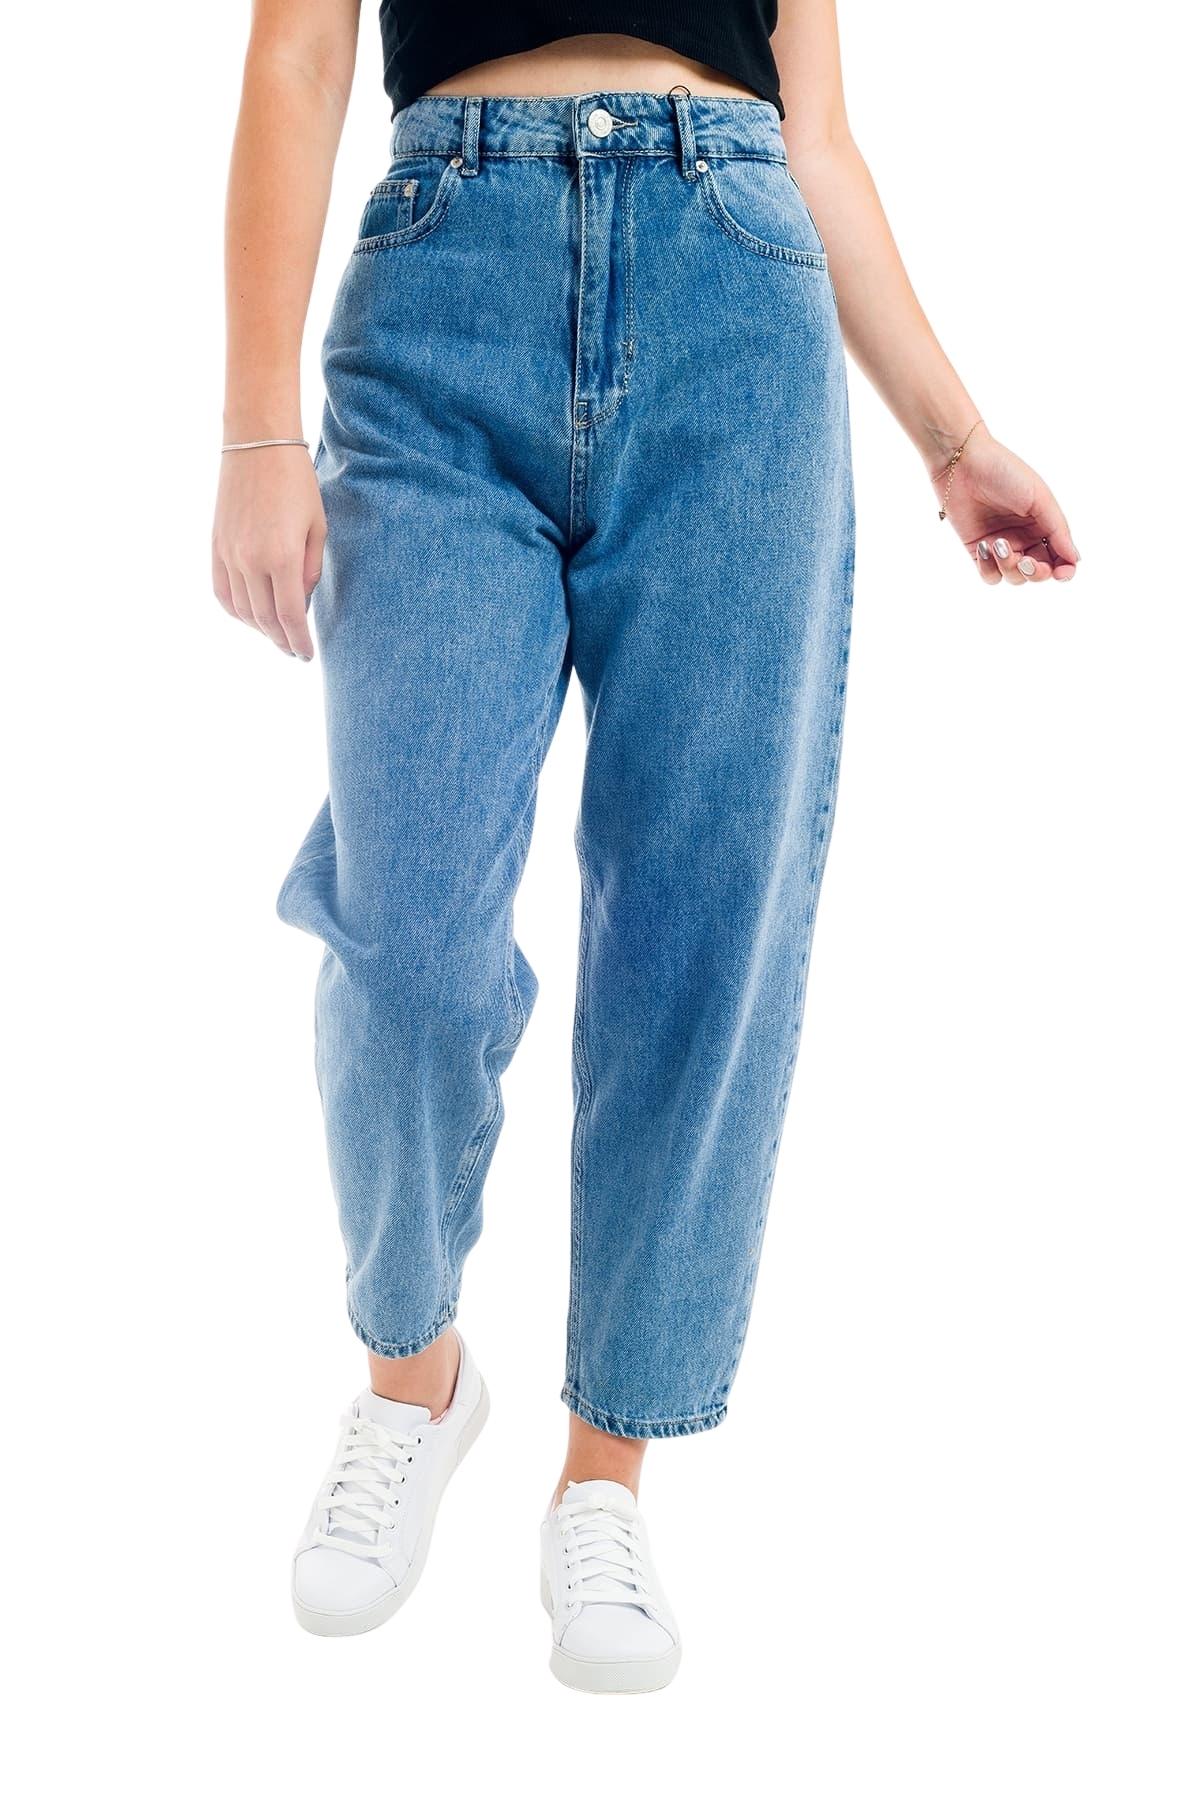 ZDN 9153 Ortadan Dikişli Mom Jeans Model Kadın Kot Pantolon